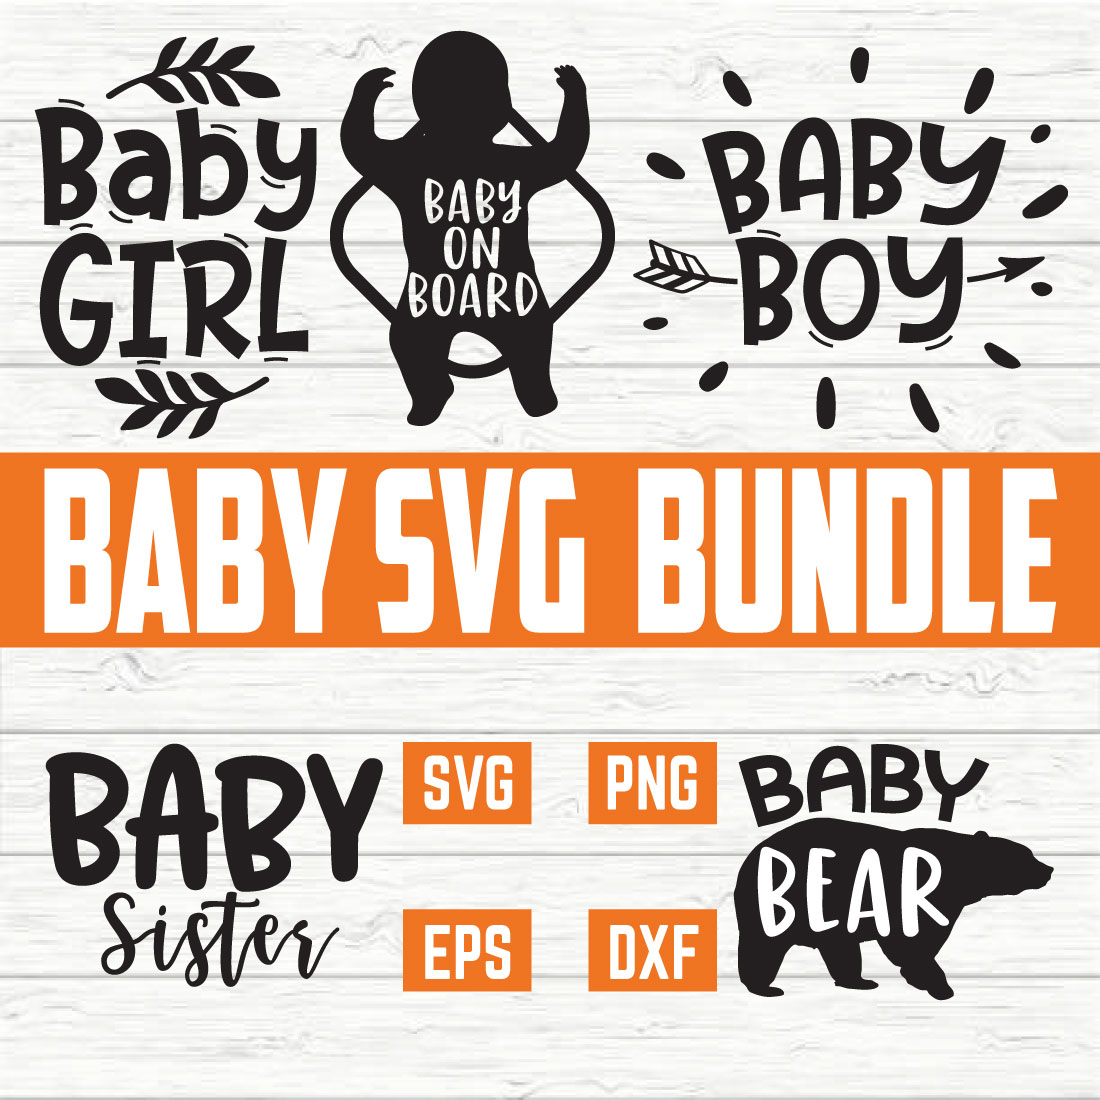 Baby Svg Bundle vol 18 preview image.